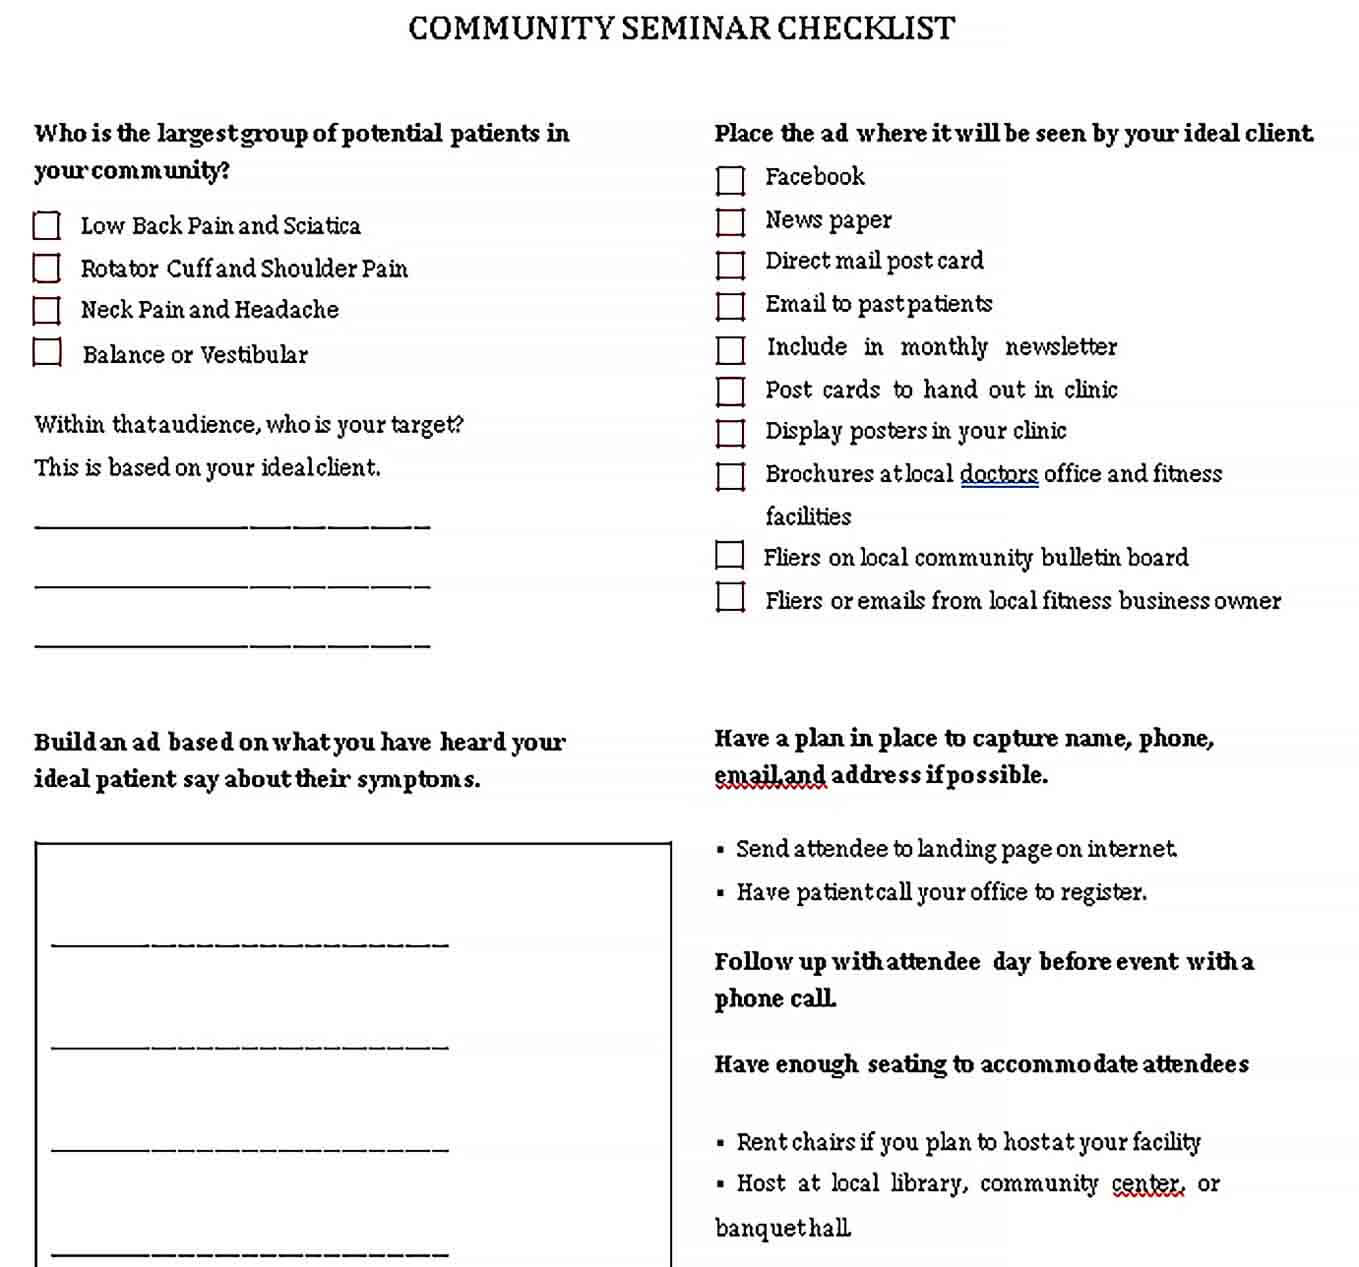 Sample Community Seminar Checklist